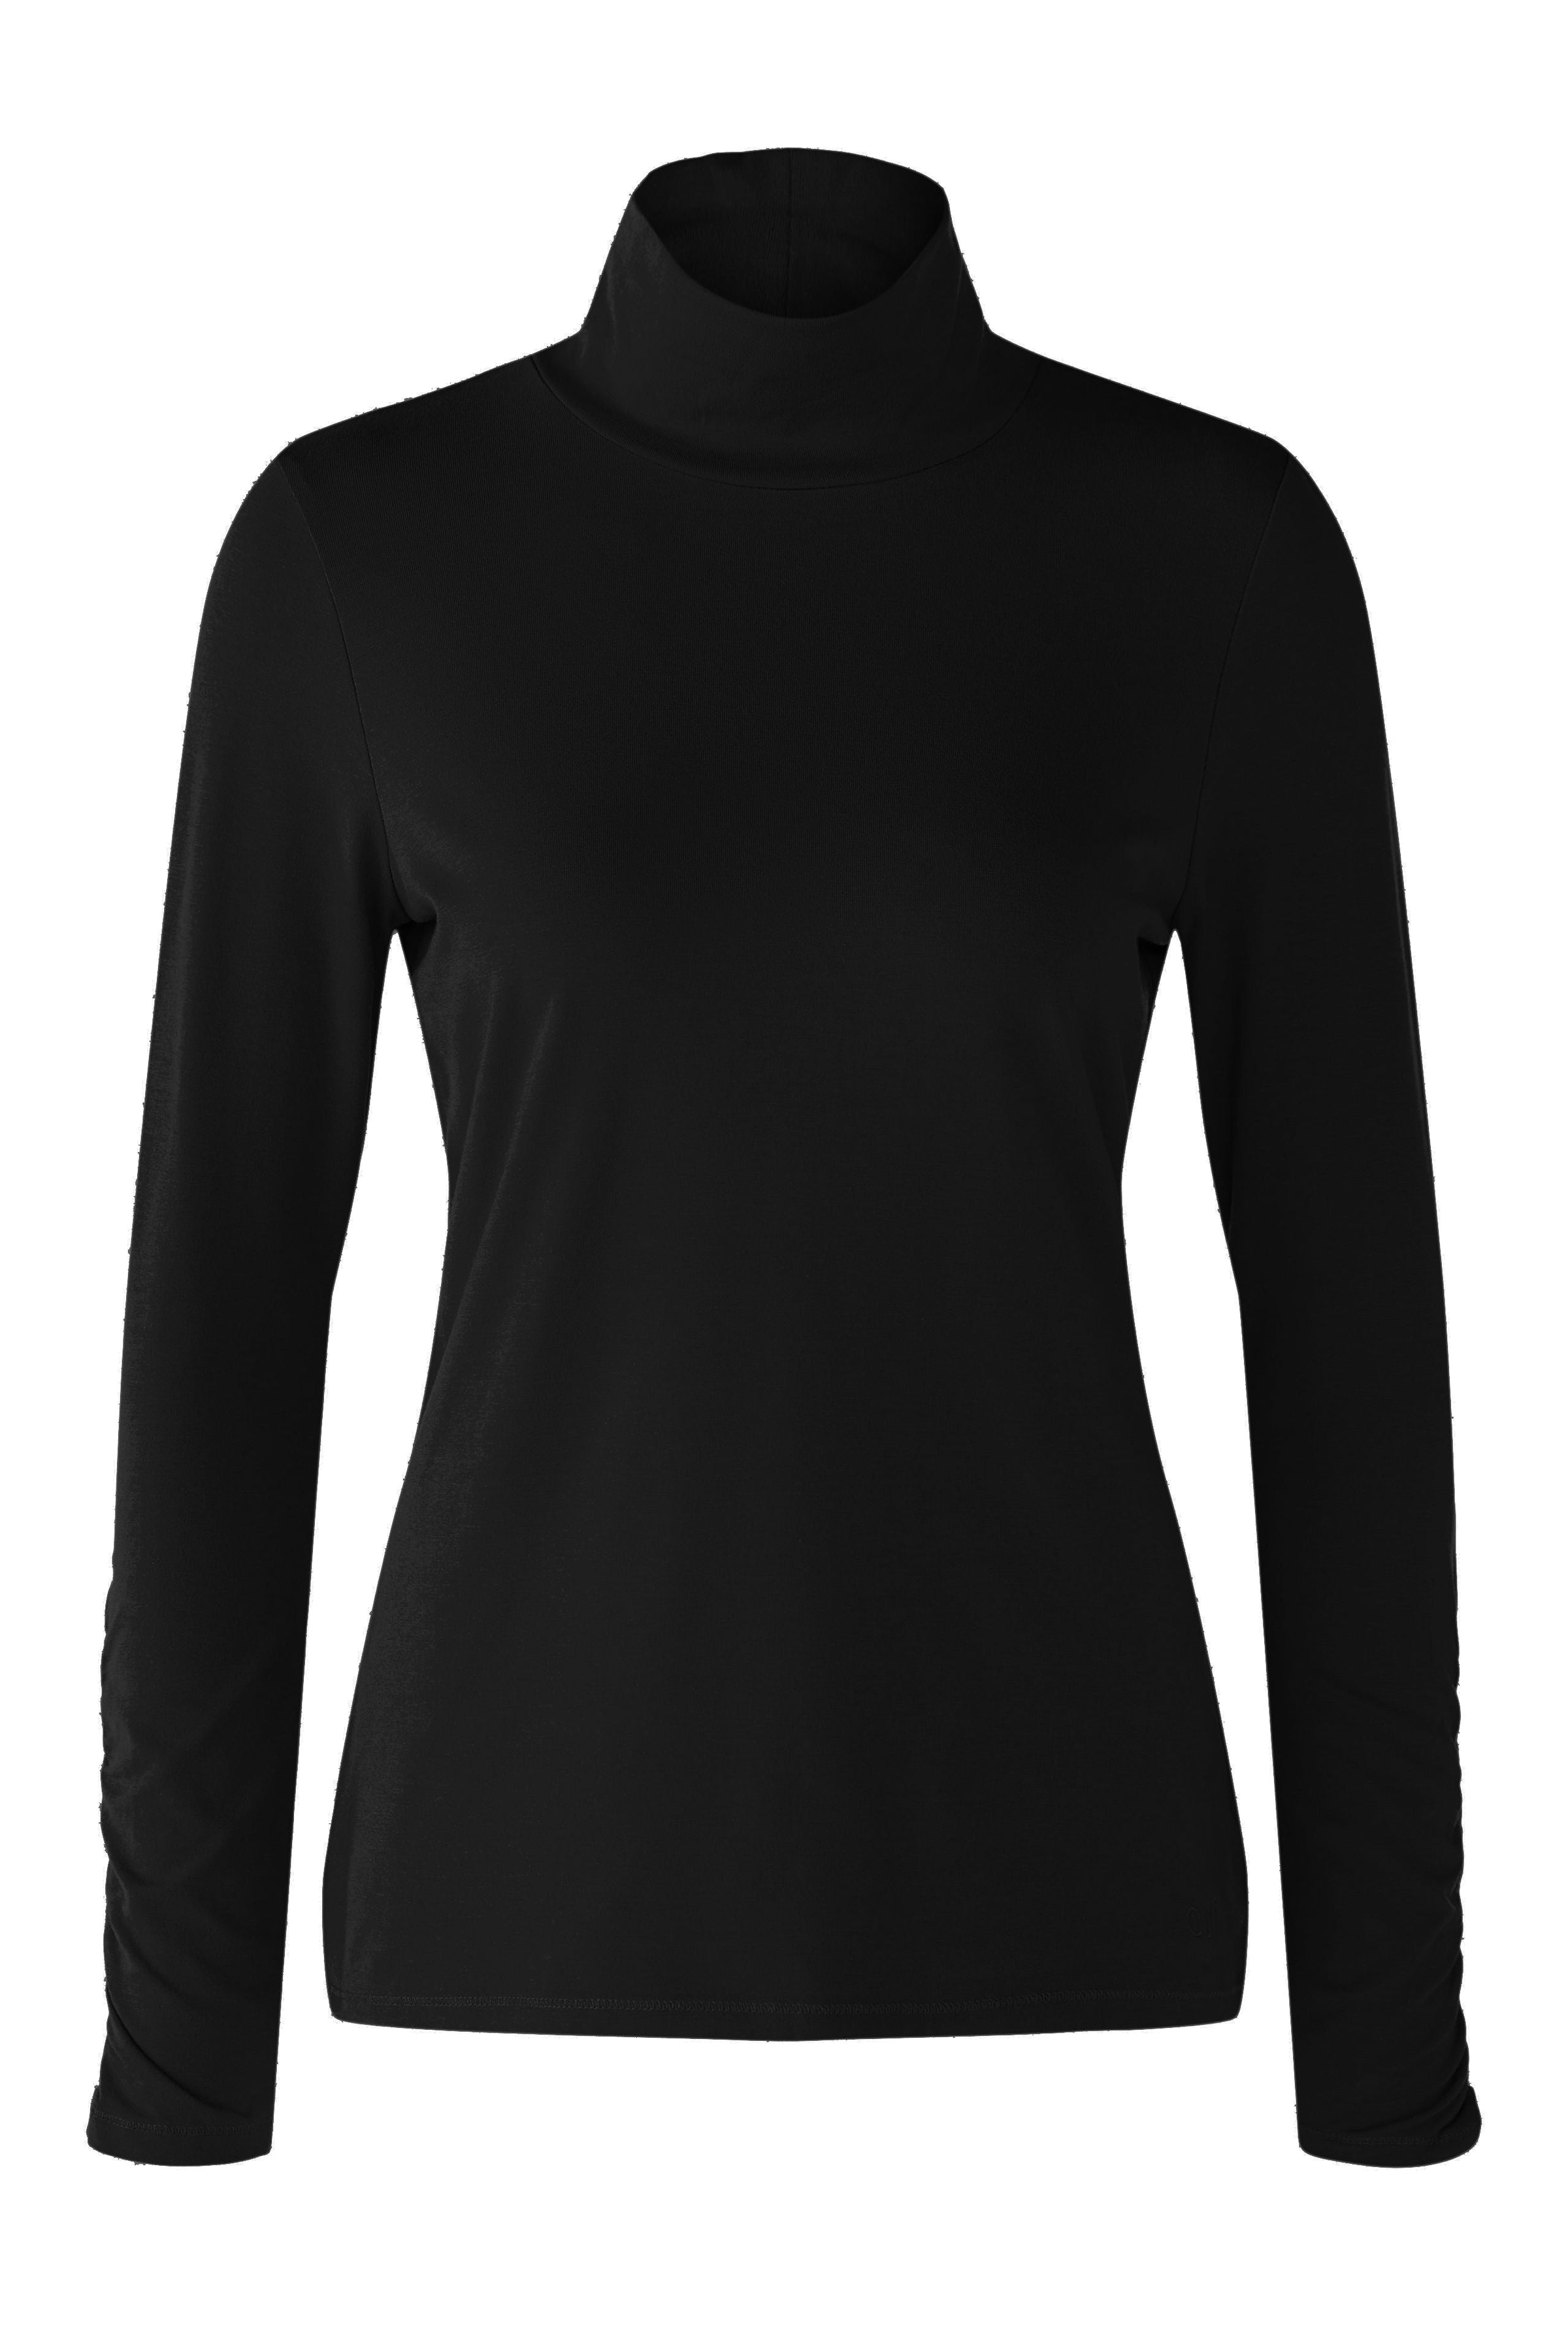 Oui Turtleneck Stand-Up Collar Shirt Black